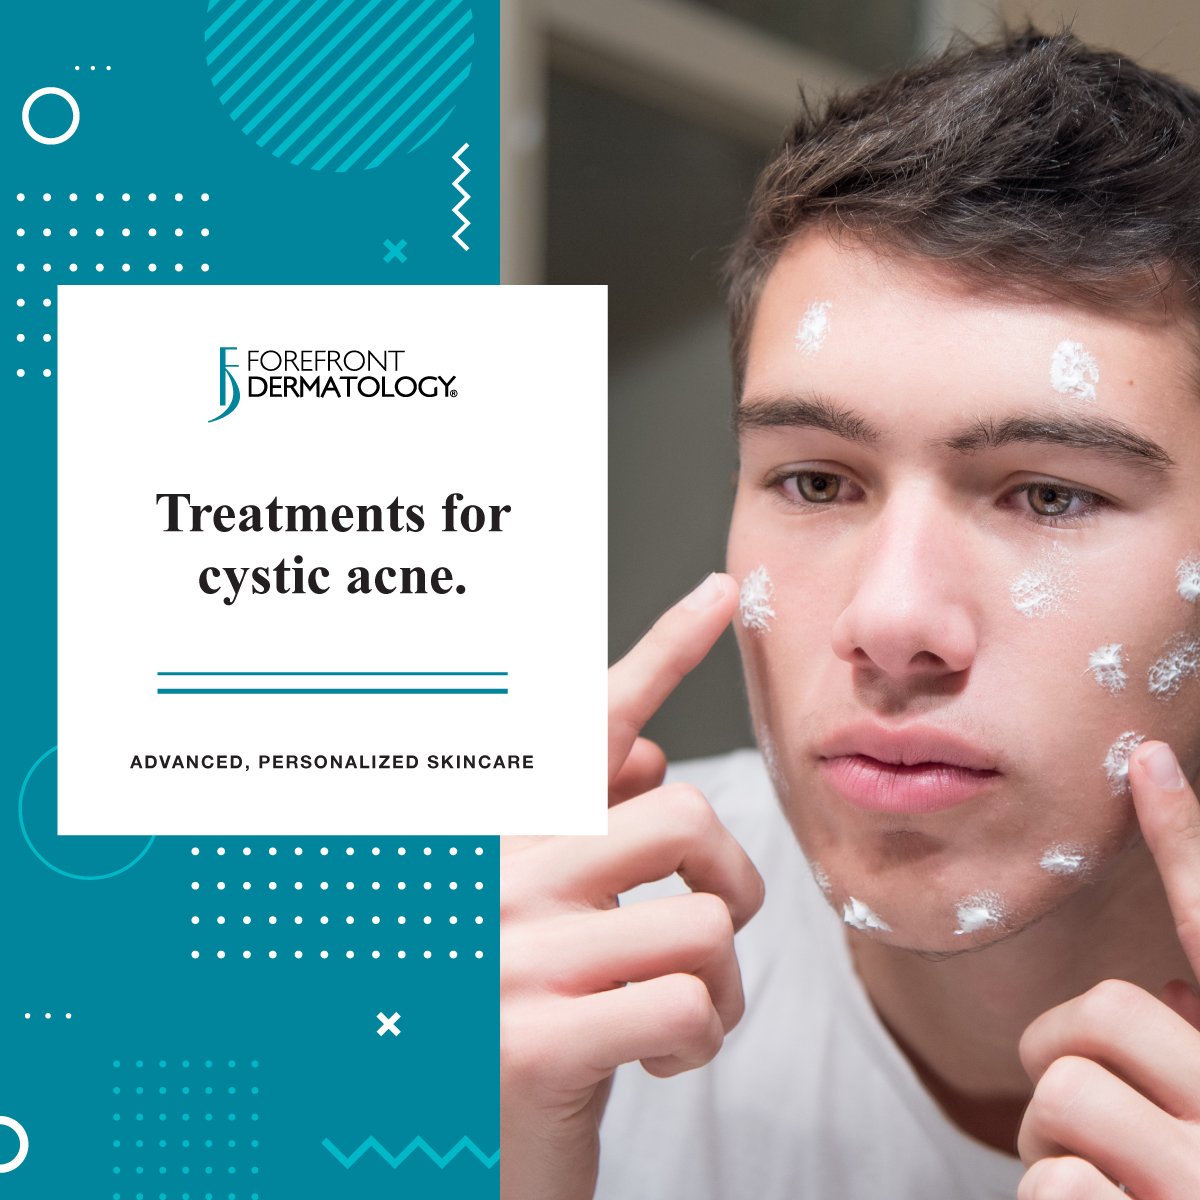 cystic acne pop